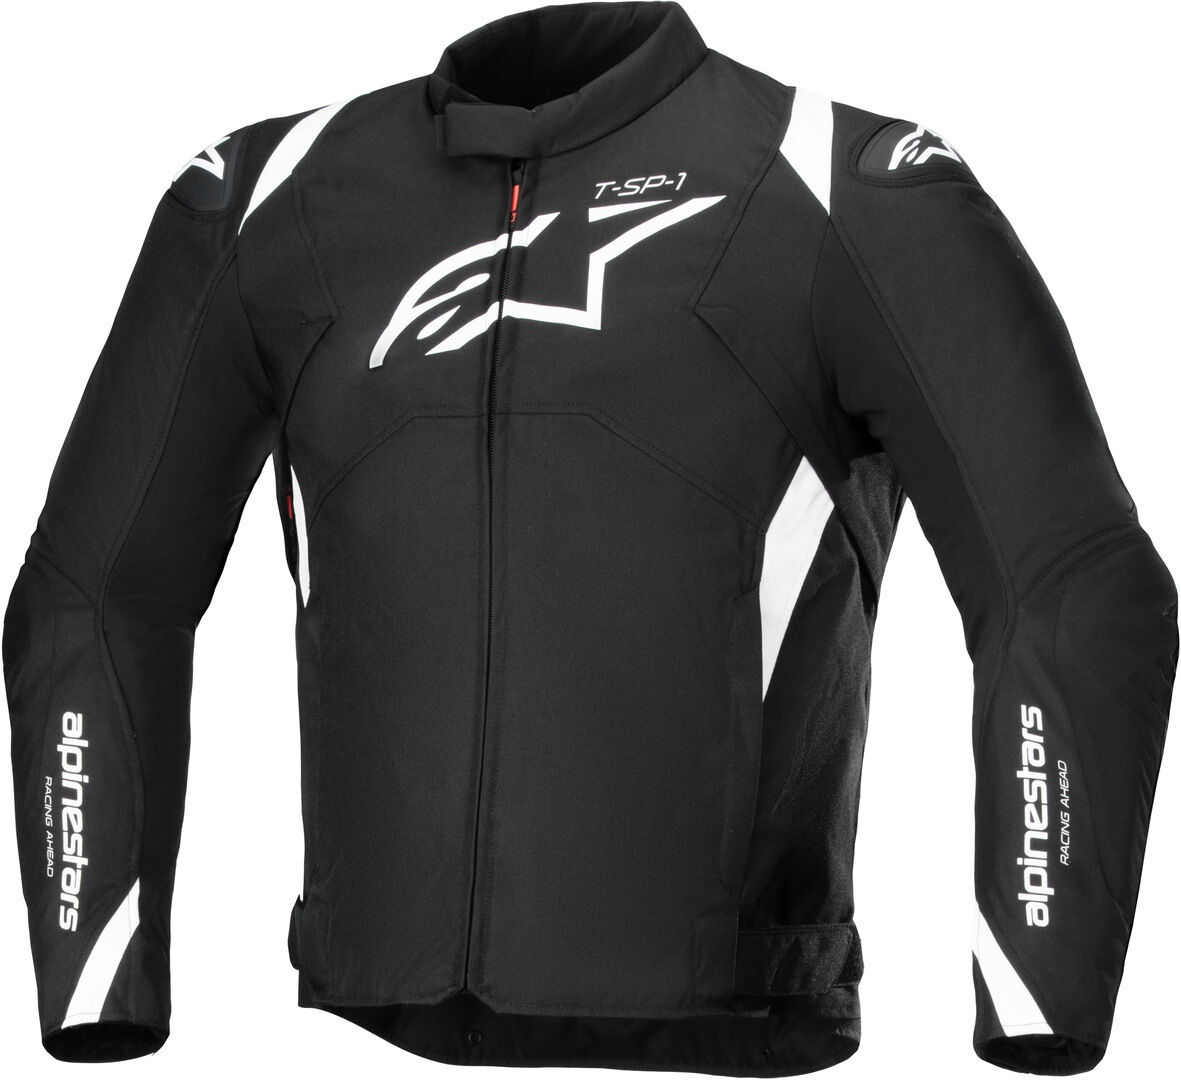 Alpinestars T-SP 1 V2 chaqueta textil impermeable para motocicletas - Negro Blanco (3XL)